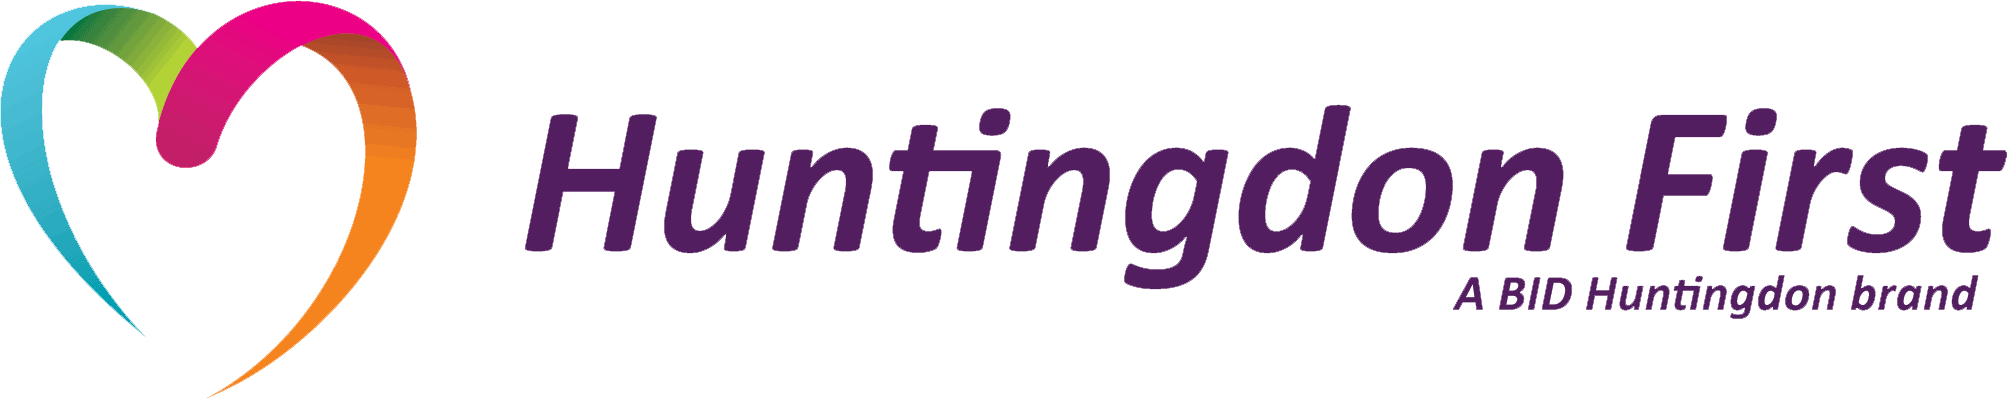 Huntingdon First logo